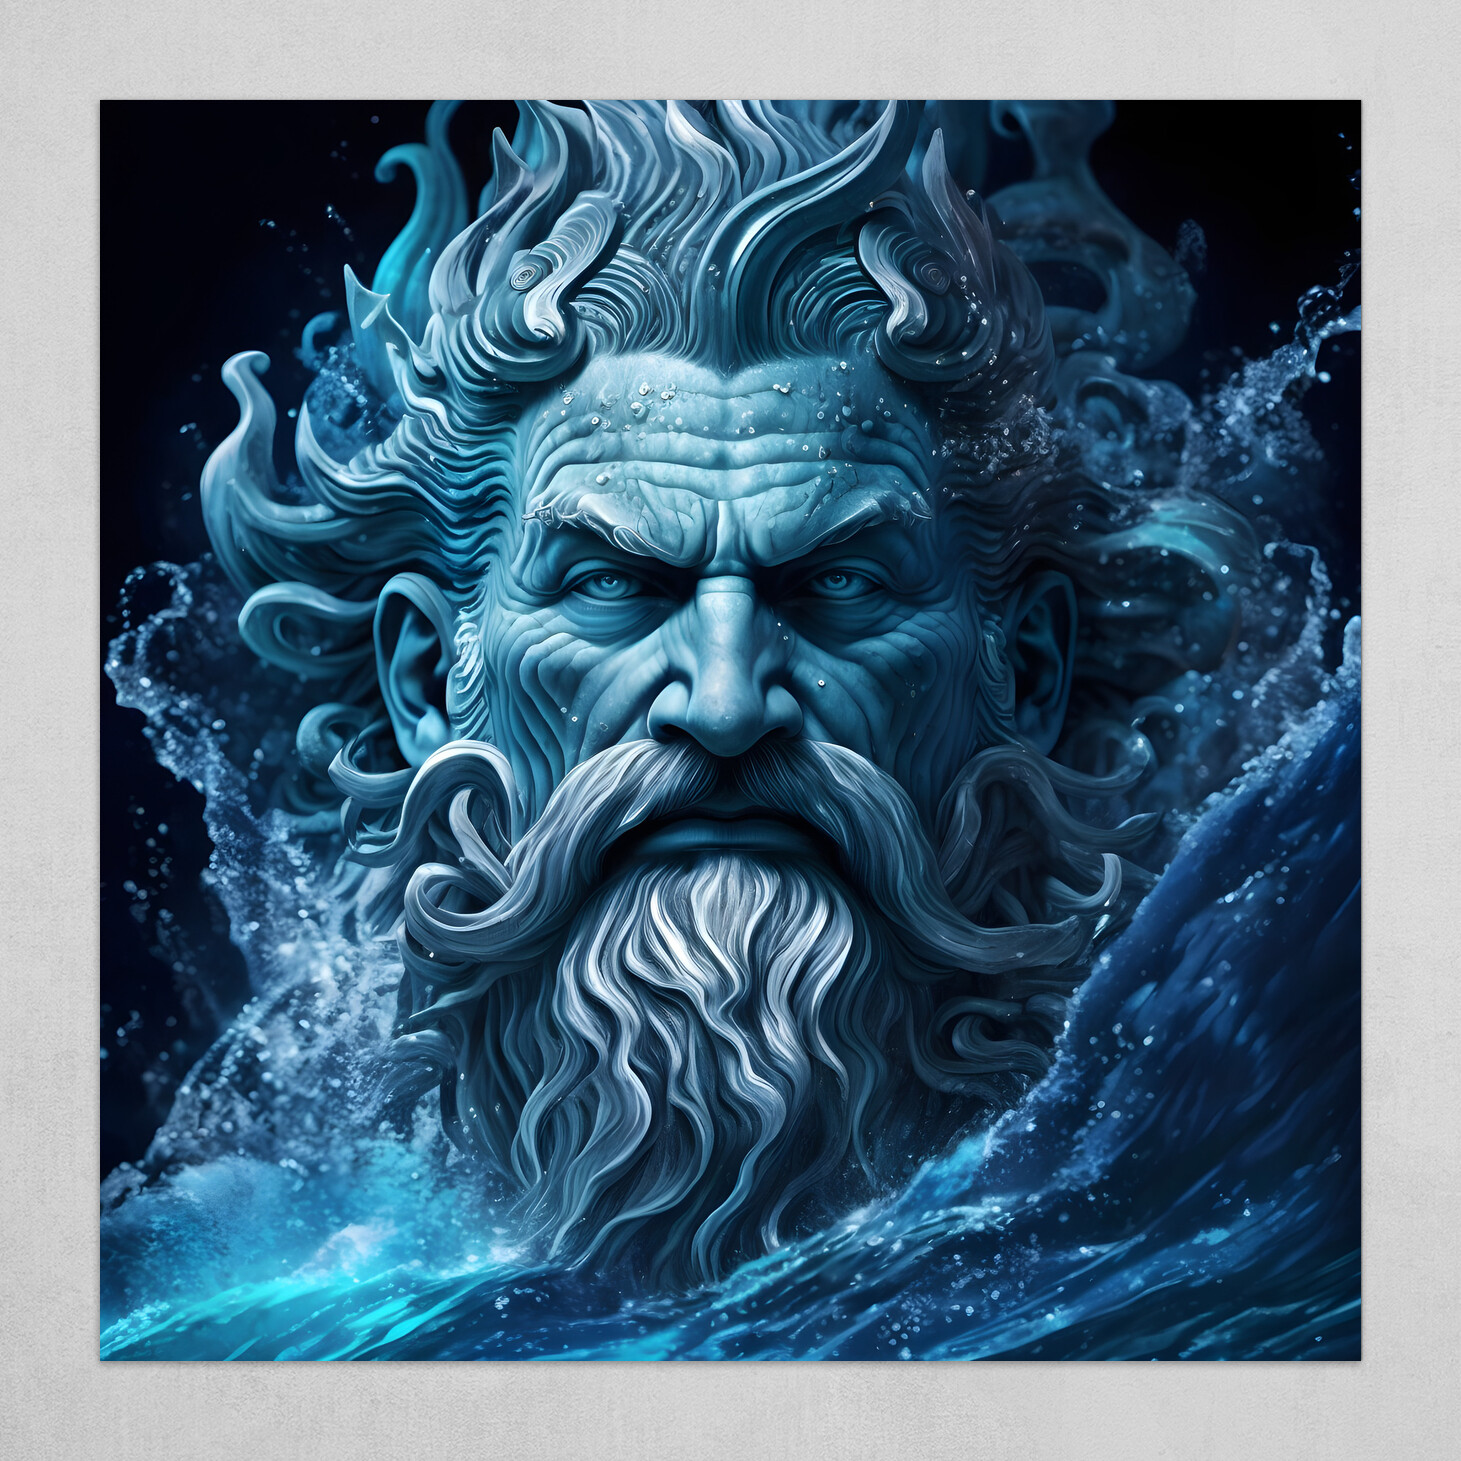 Poseidon - The Earth Shaker